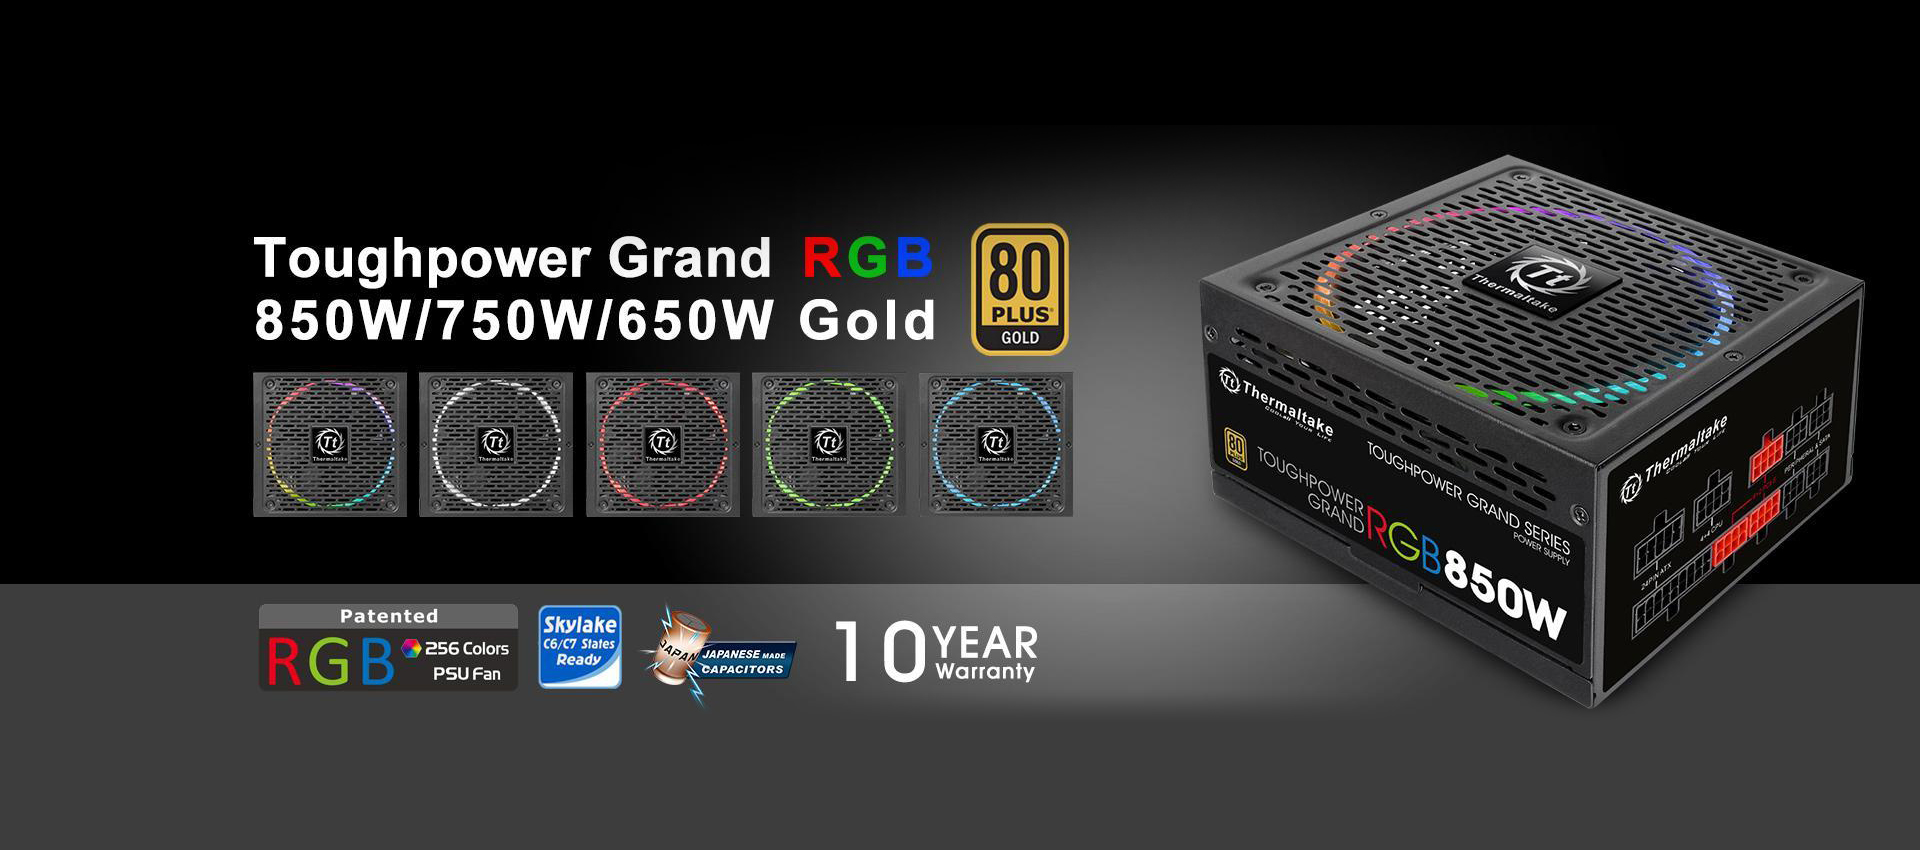 Toughpower Grand RGB 850W Gold Full Modular